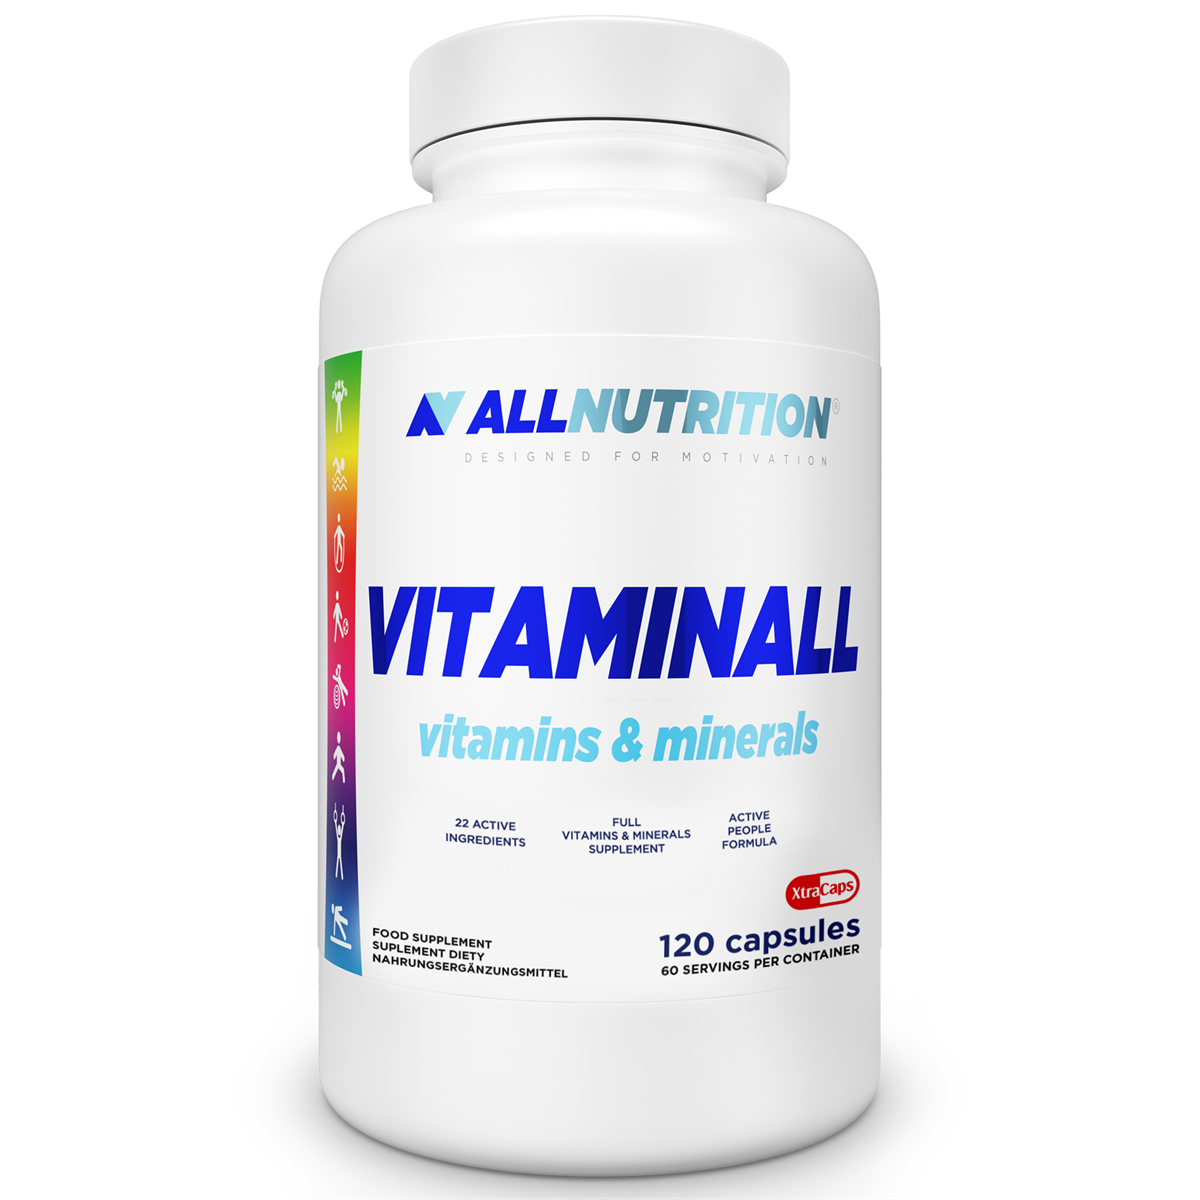 29 Pln Vitaminall Vitamins Minerals 120caps Allnutrition Najtaniej Sklep Sfd